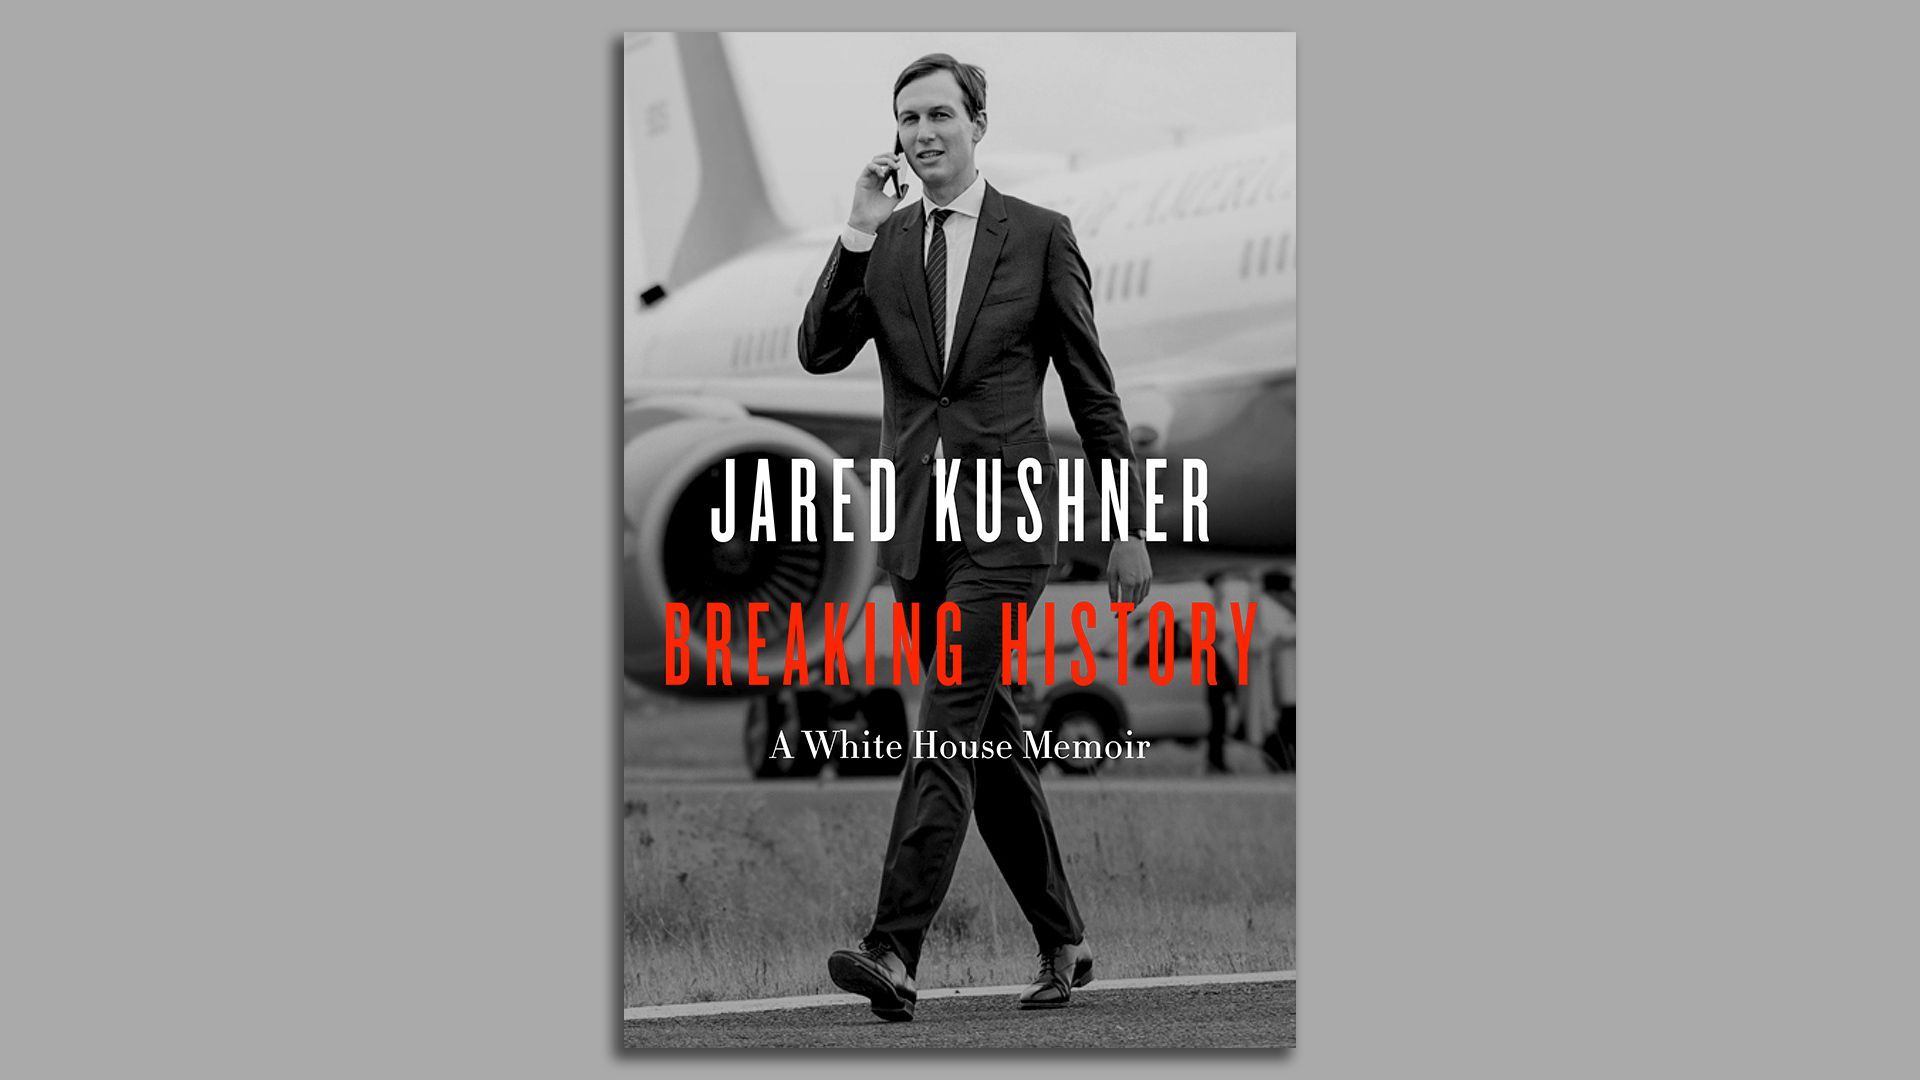 Jared Kushner book cover